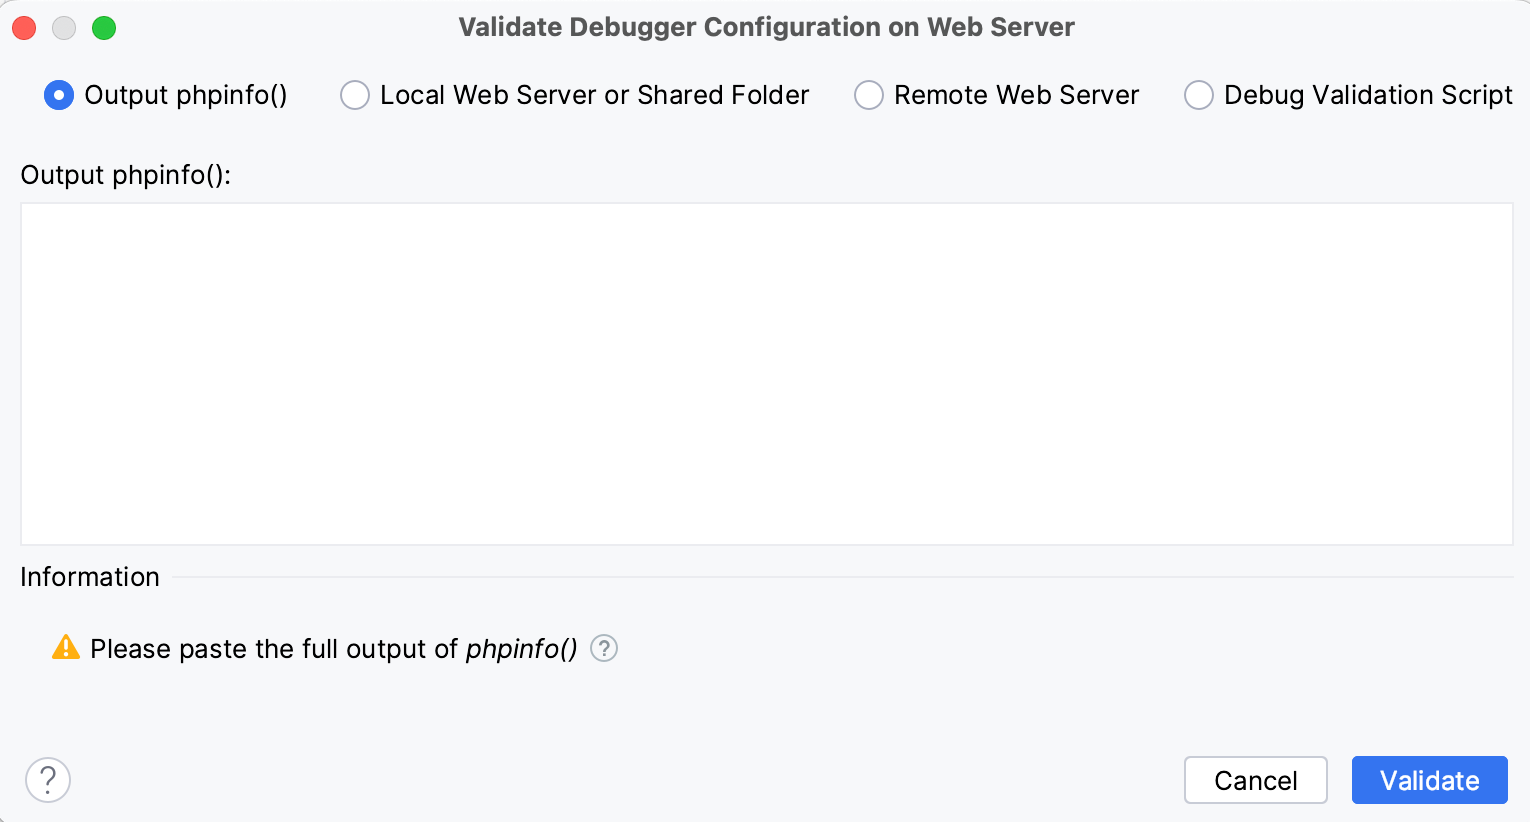 Validate Debugger Configuration on Web Server dialog